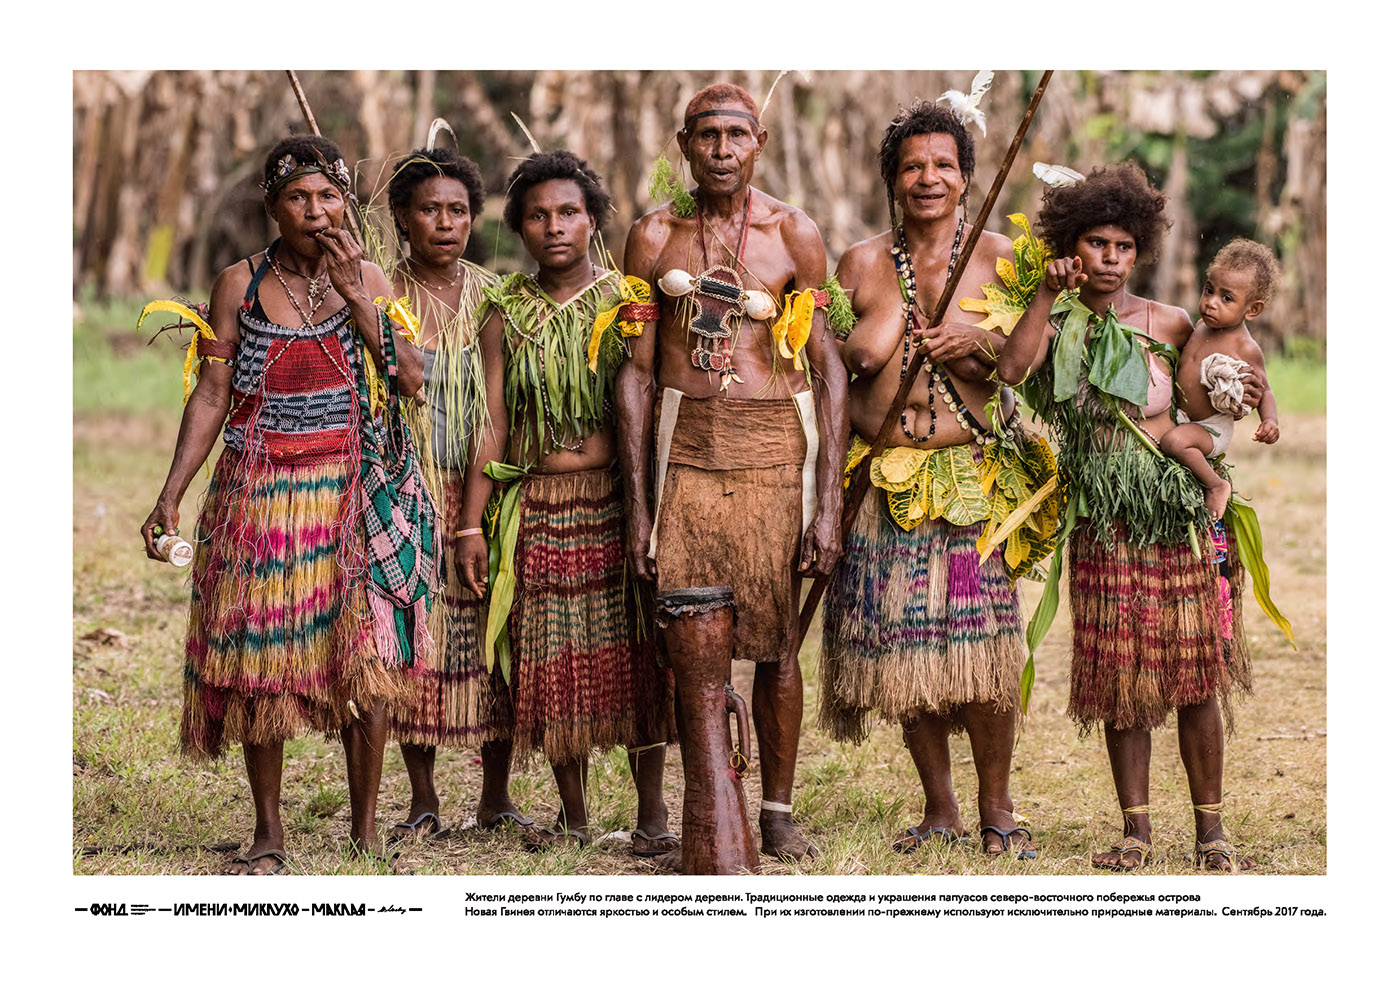 Народы новой гвинеи. Папуа новая Гвинея Папуасы. Нац одежда Папуа новая Гвинея. Национальный костюм Папуа новая Гвинея. Папуасы новой Гвинеи.